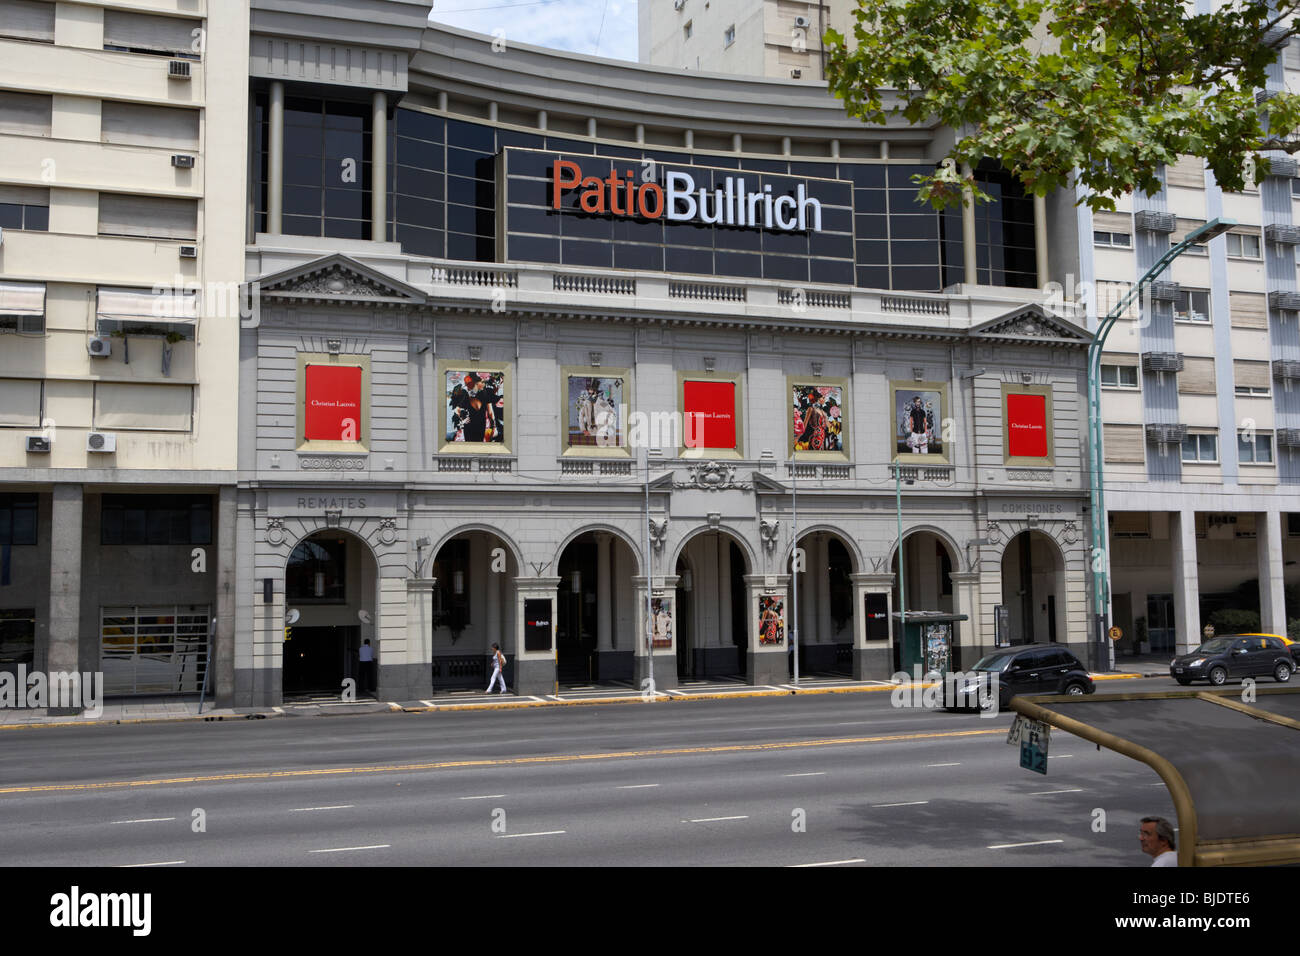 patio bullrich shopping center buenos aires republic of argentina south america Stock Photo